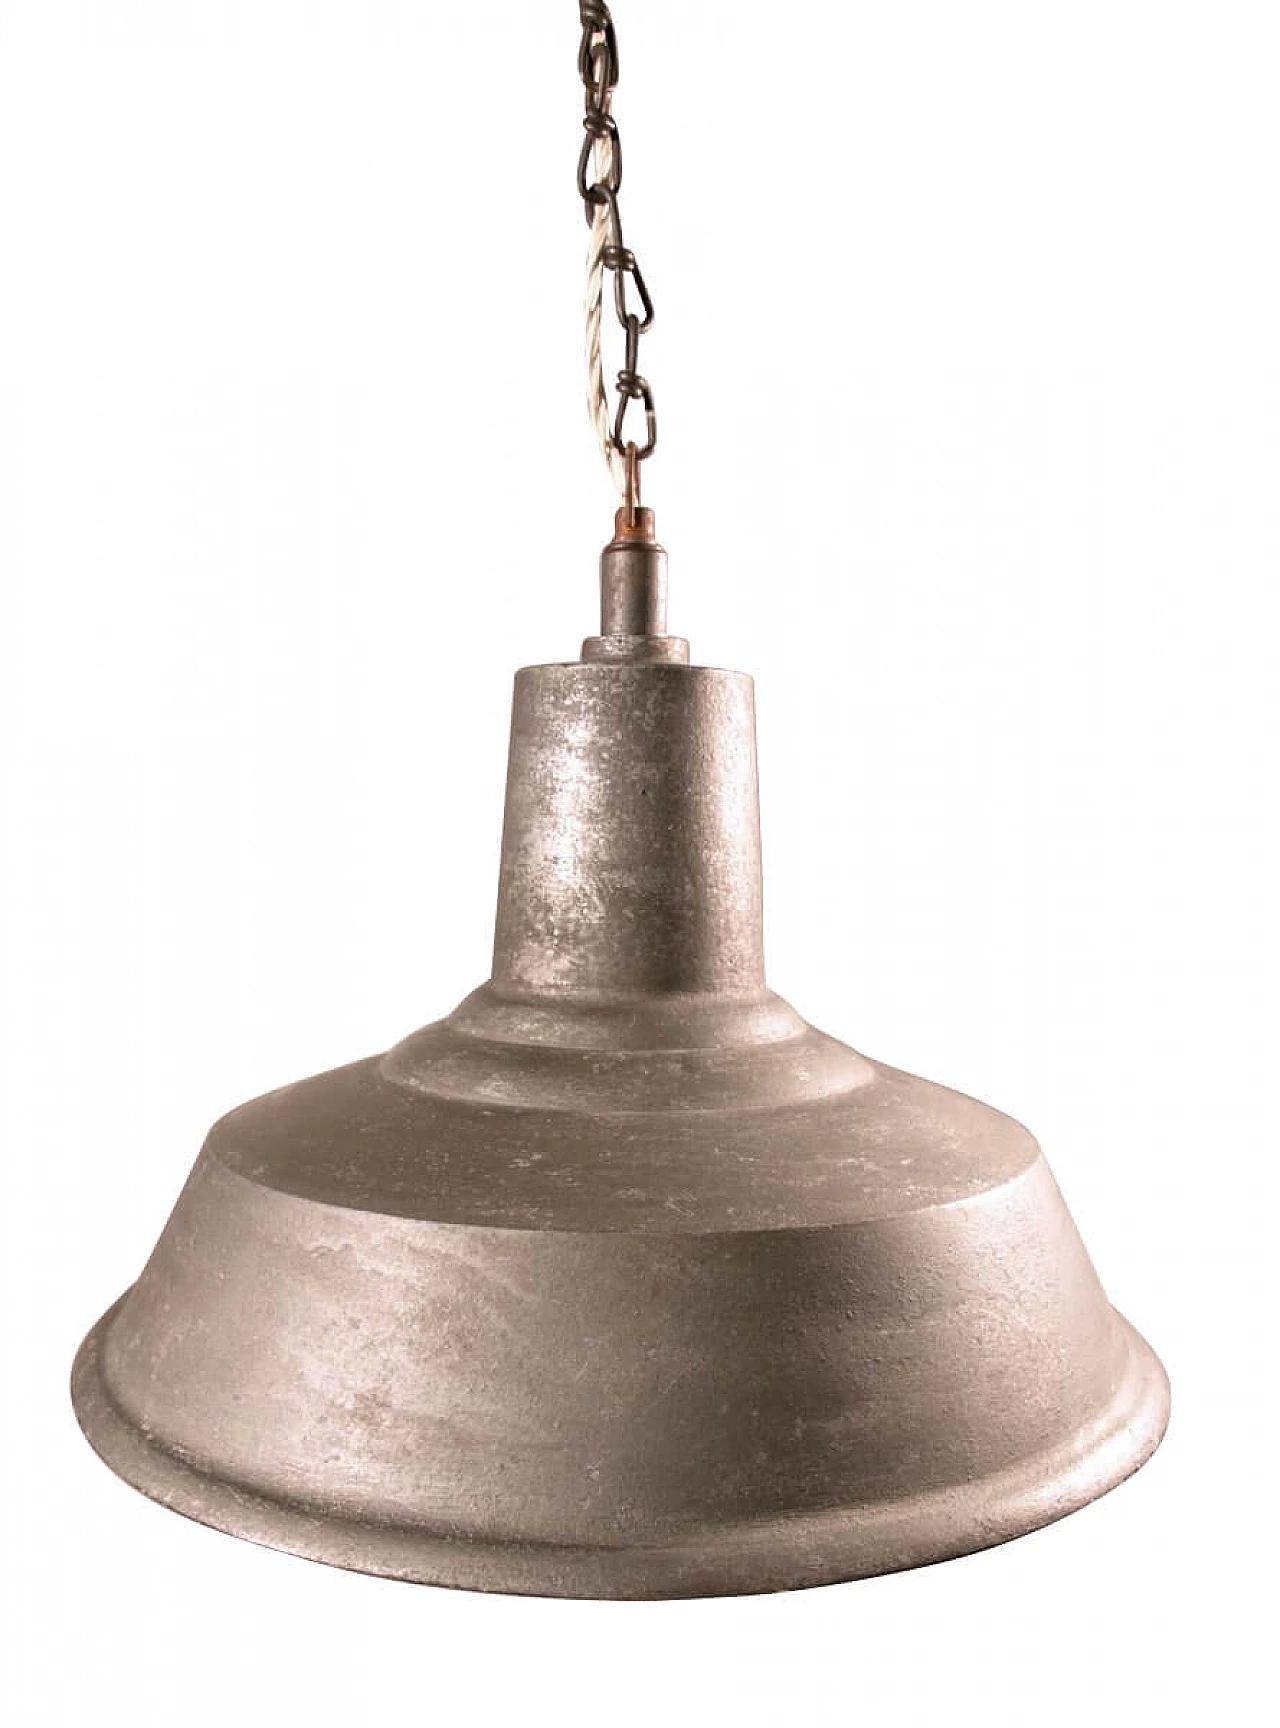 3 Italian cast iron industrial ceiling lamps, 1930s 1089347